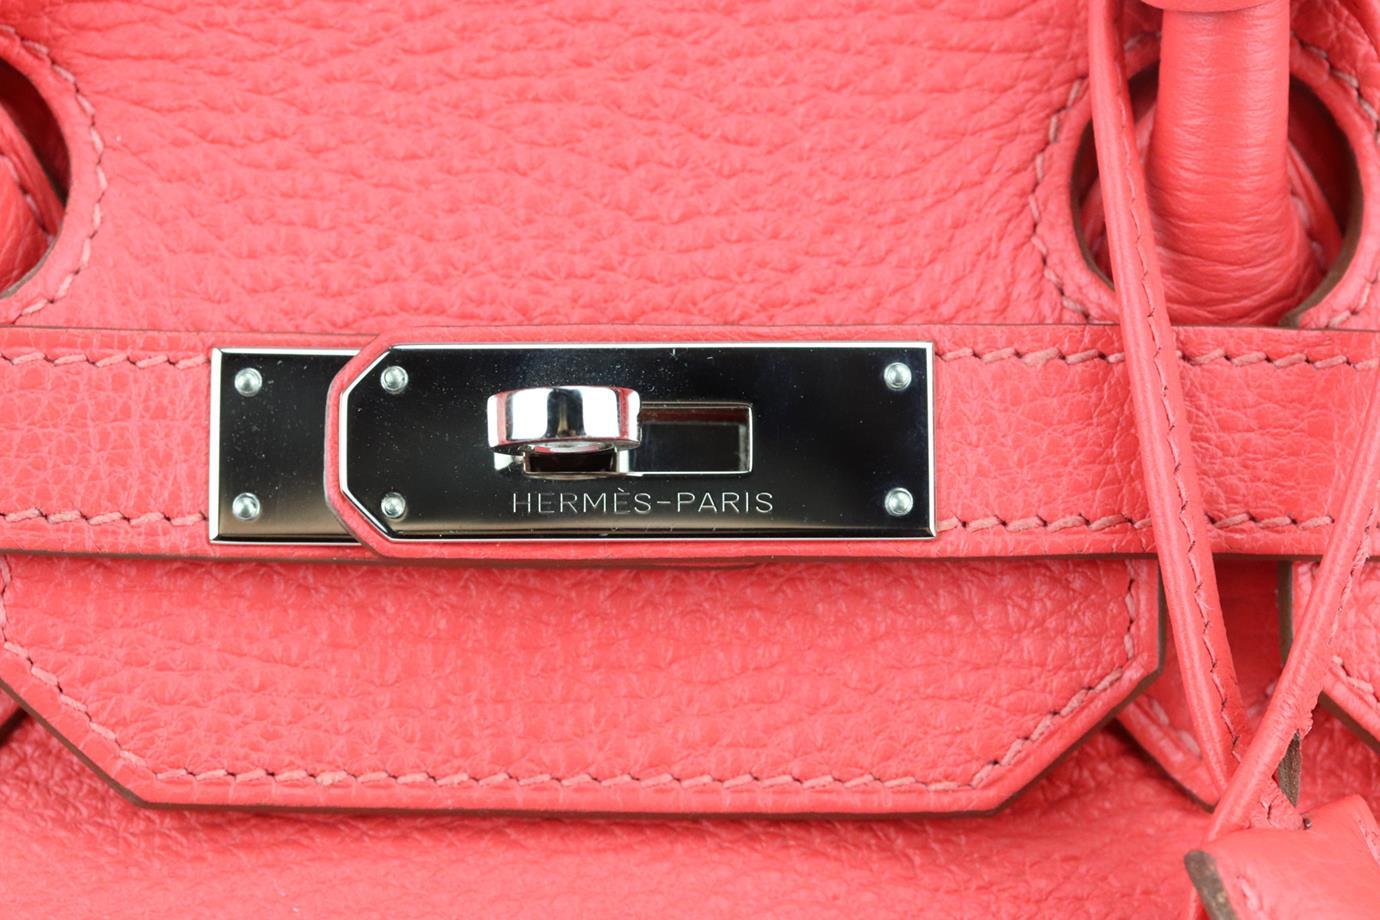 Hermès 2012 Birkin 35cm Togo Leather Bag For Sale 4